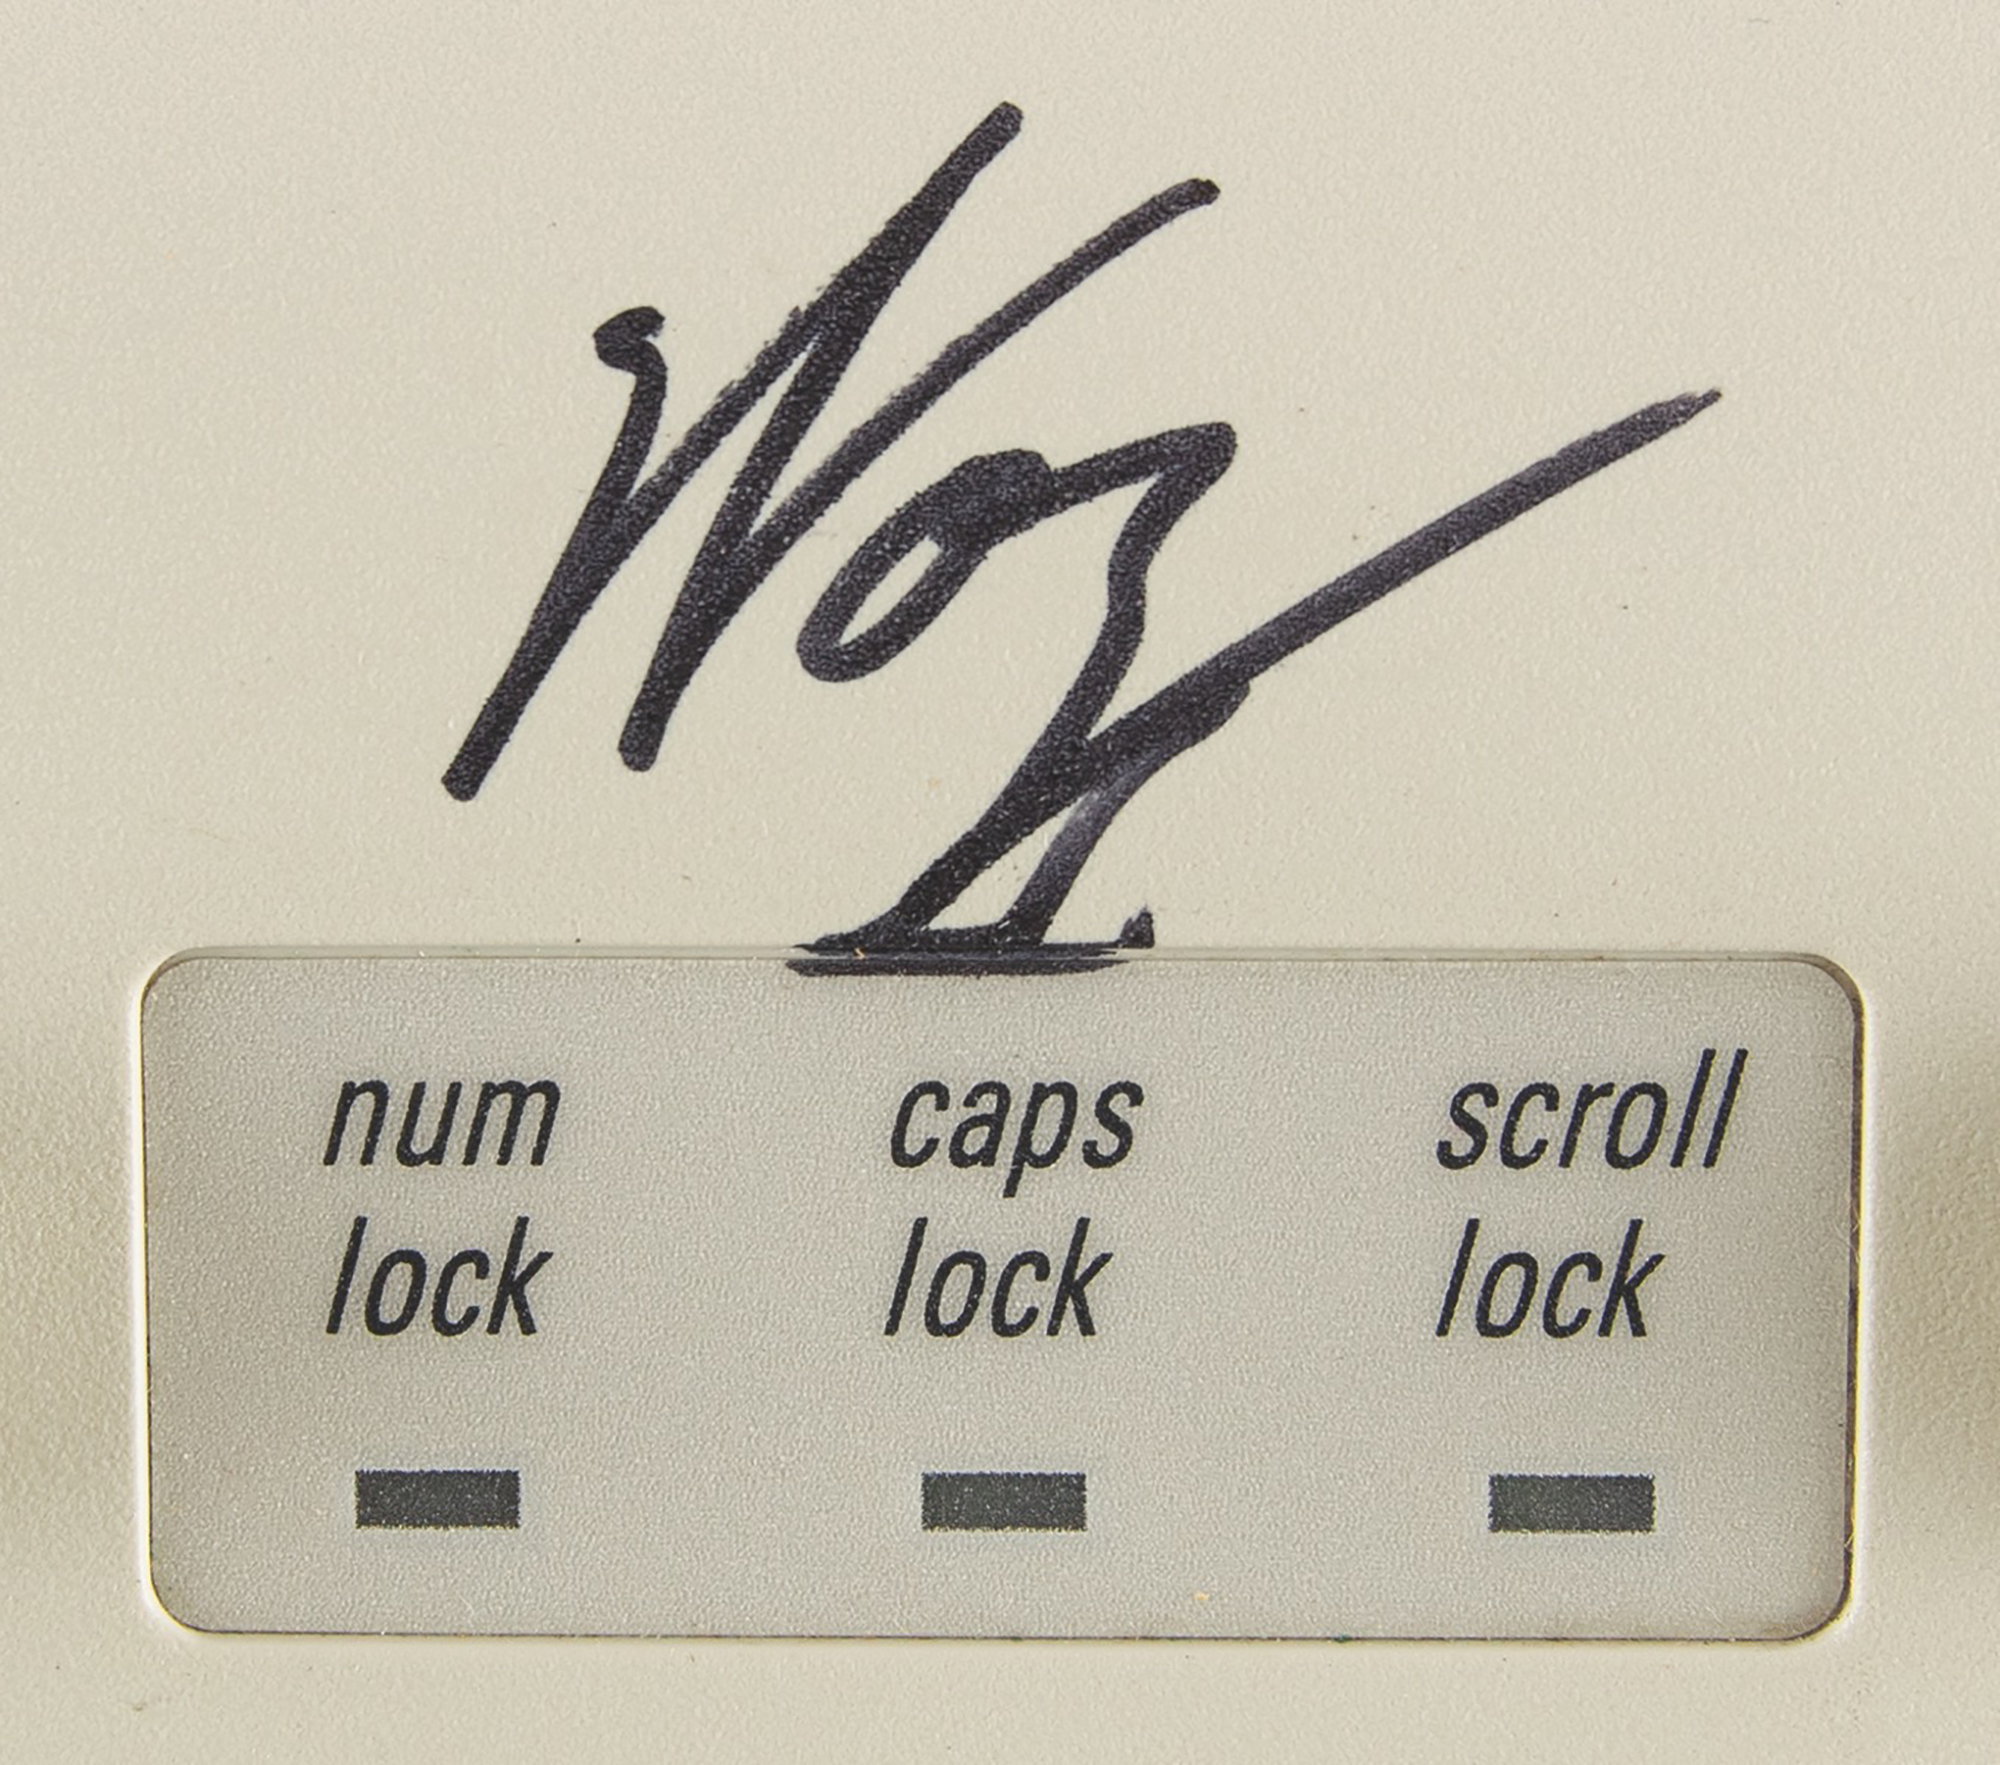 Lot #8043 Steve Wozniak Signed Apple Keyboard - Image 2